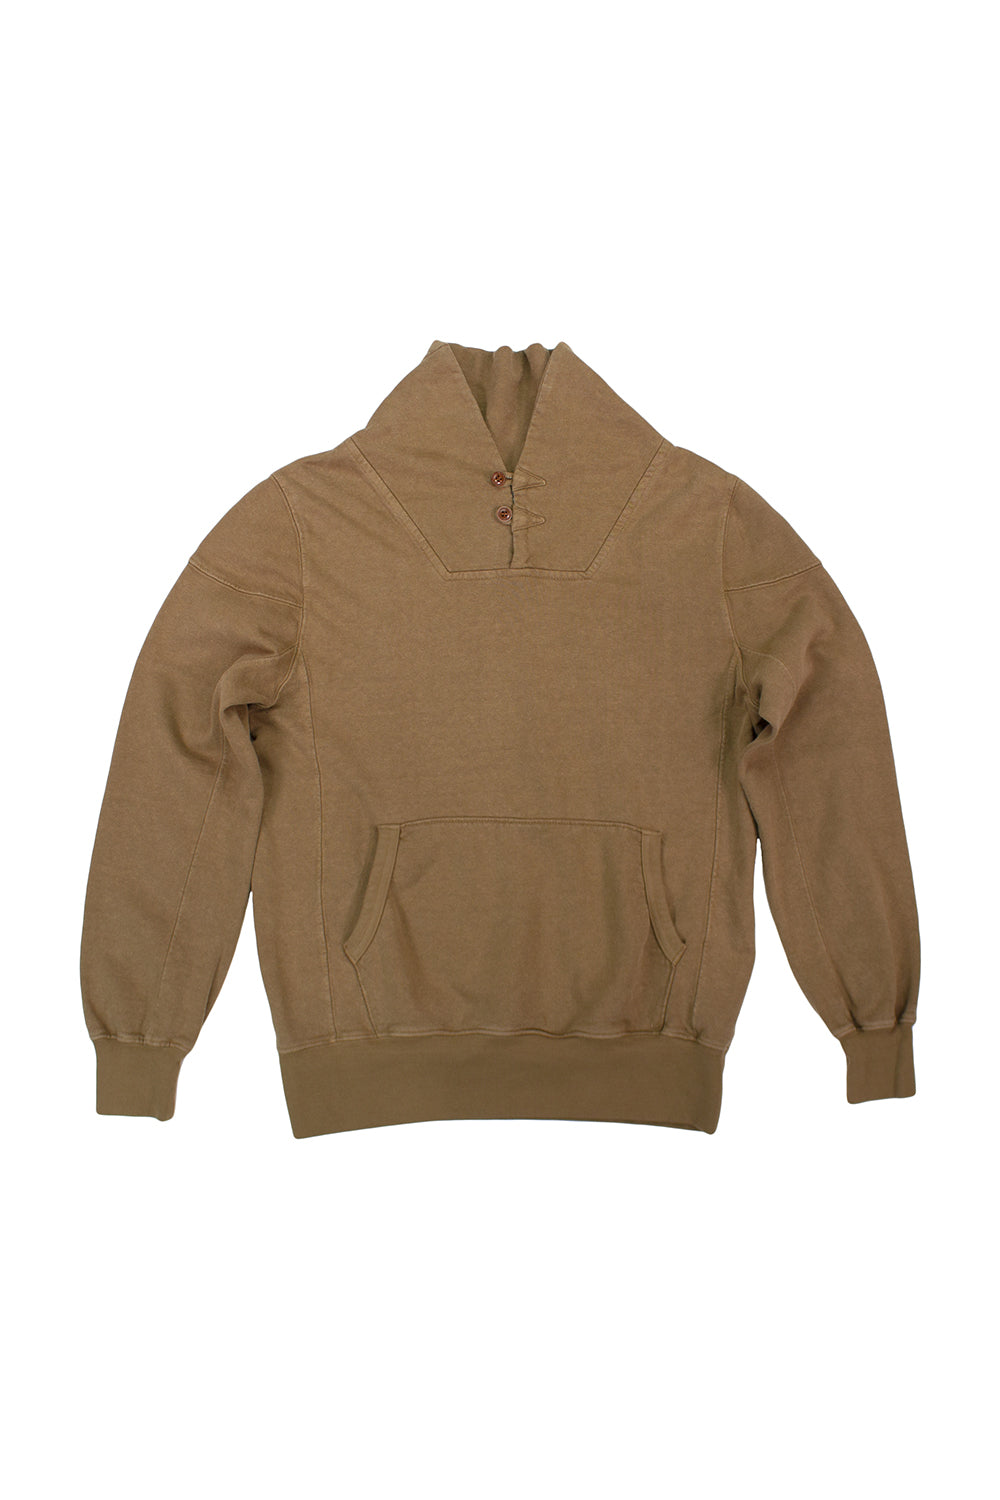 Whittier Sweatshirt | Jungmaven Hemp Clothing & Accessories / Color: Coyote